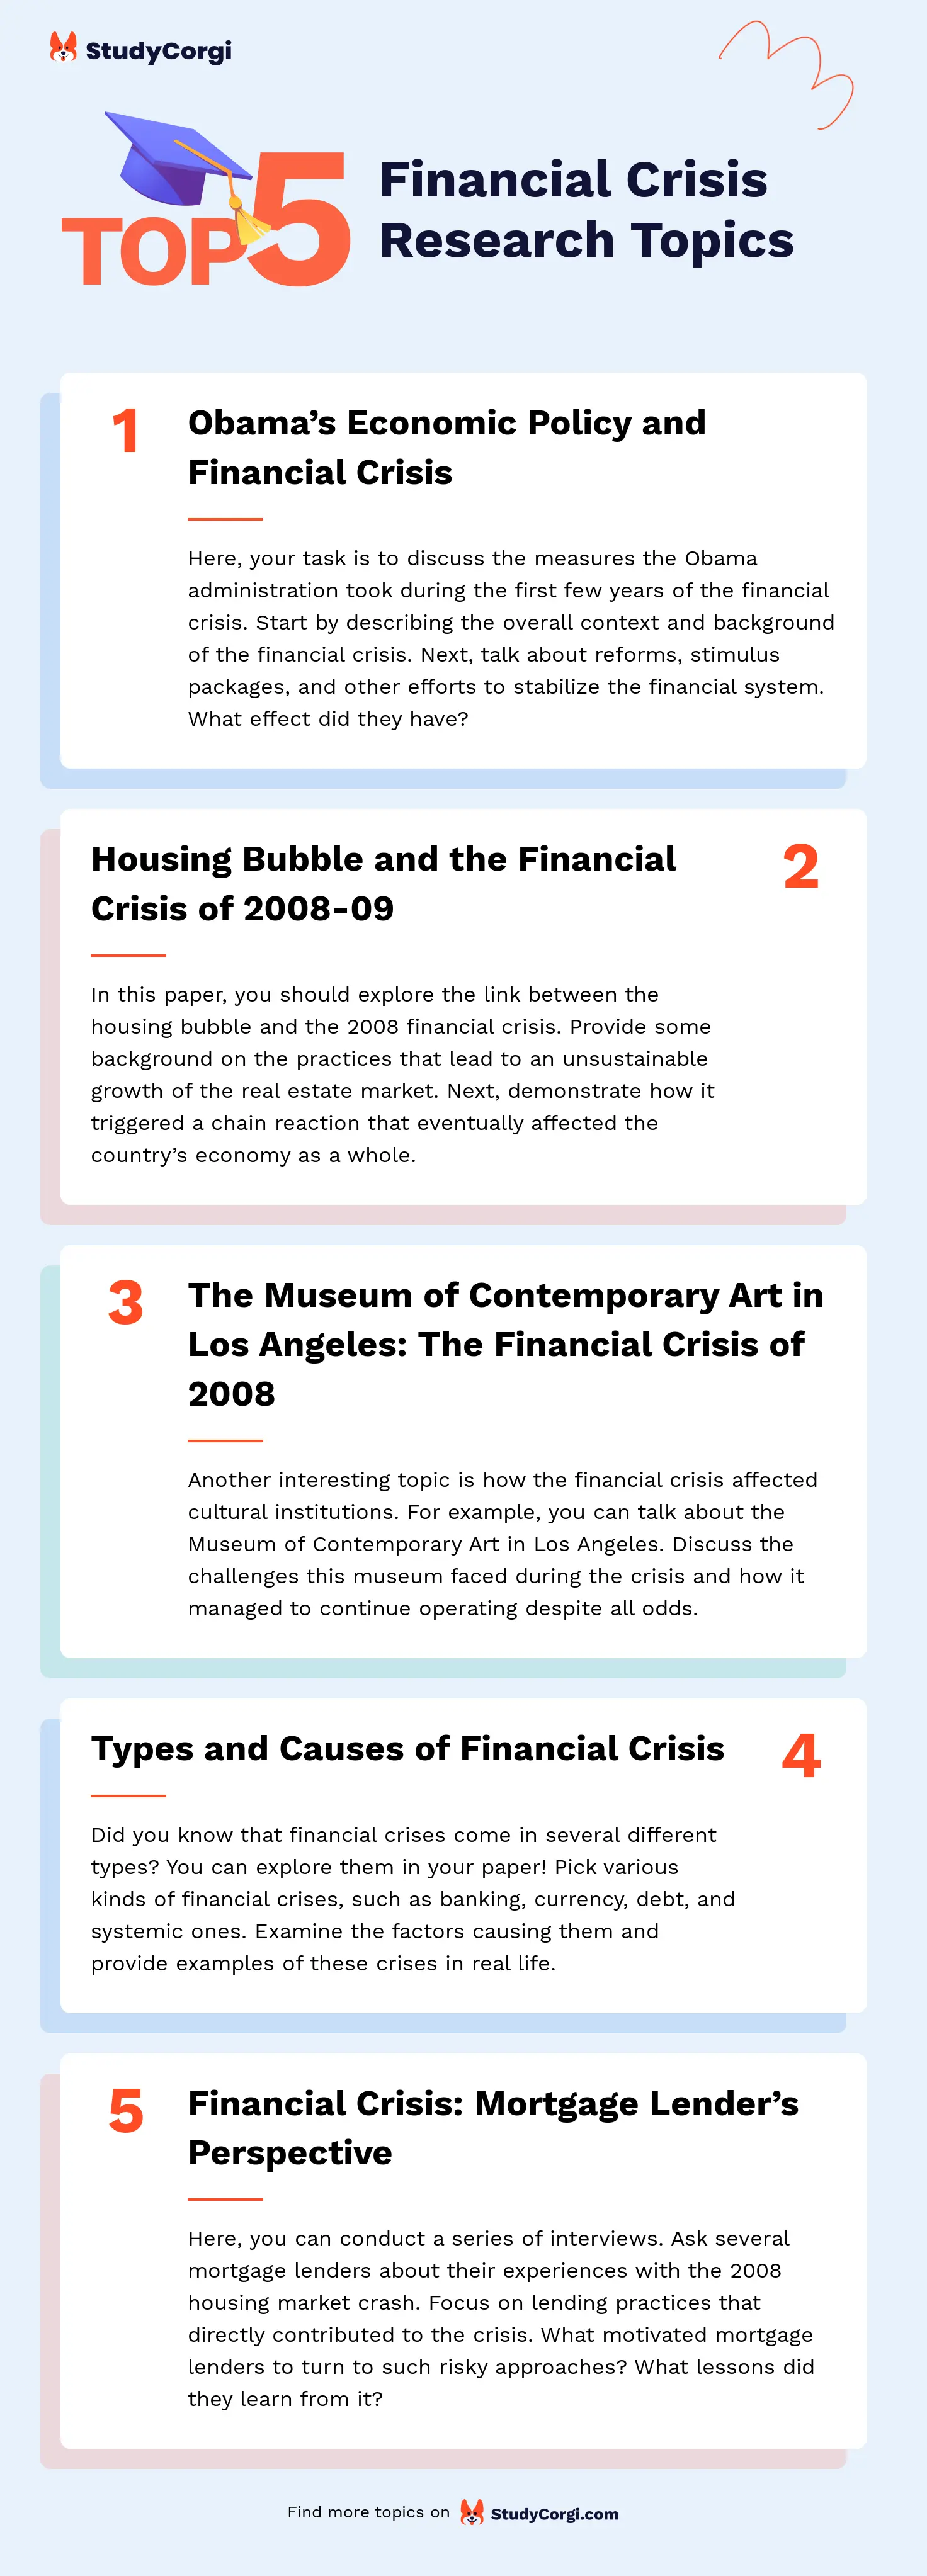 TOP-5 Financial Crisis Research Topics